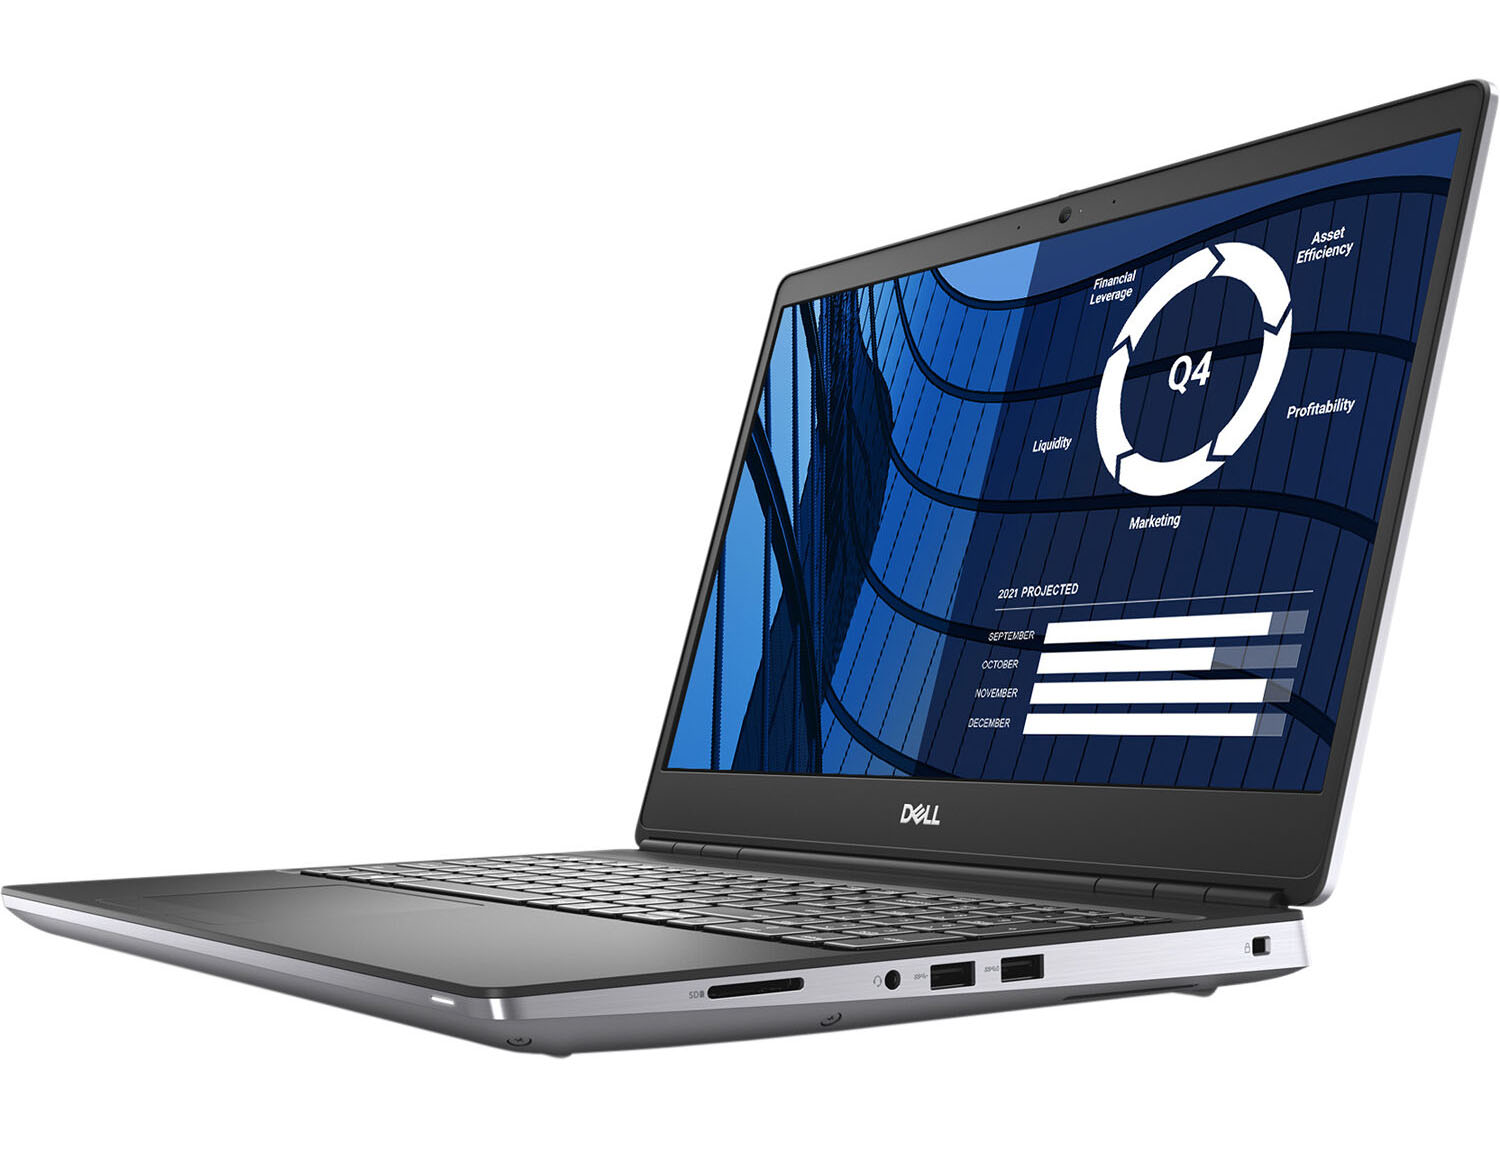 Bán Laptop Dell Precision 7750 Core i9 chính hãng uy tín - LaptopAZ.vn